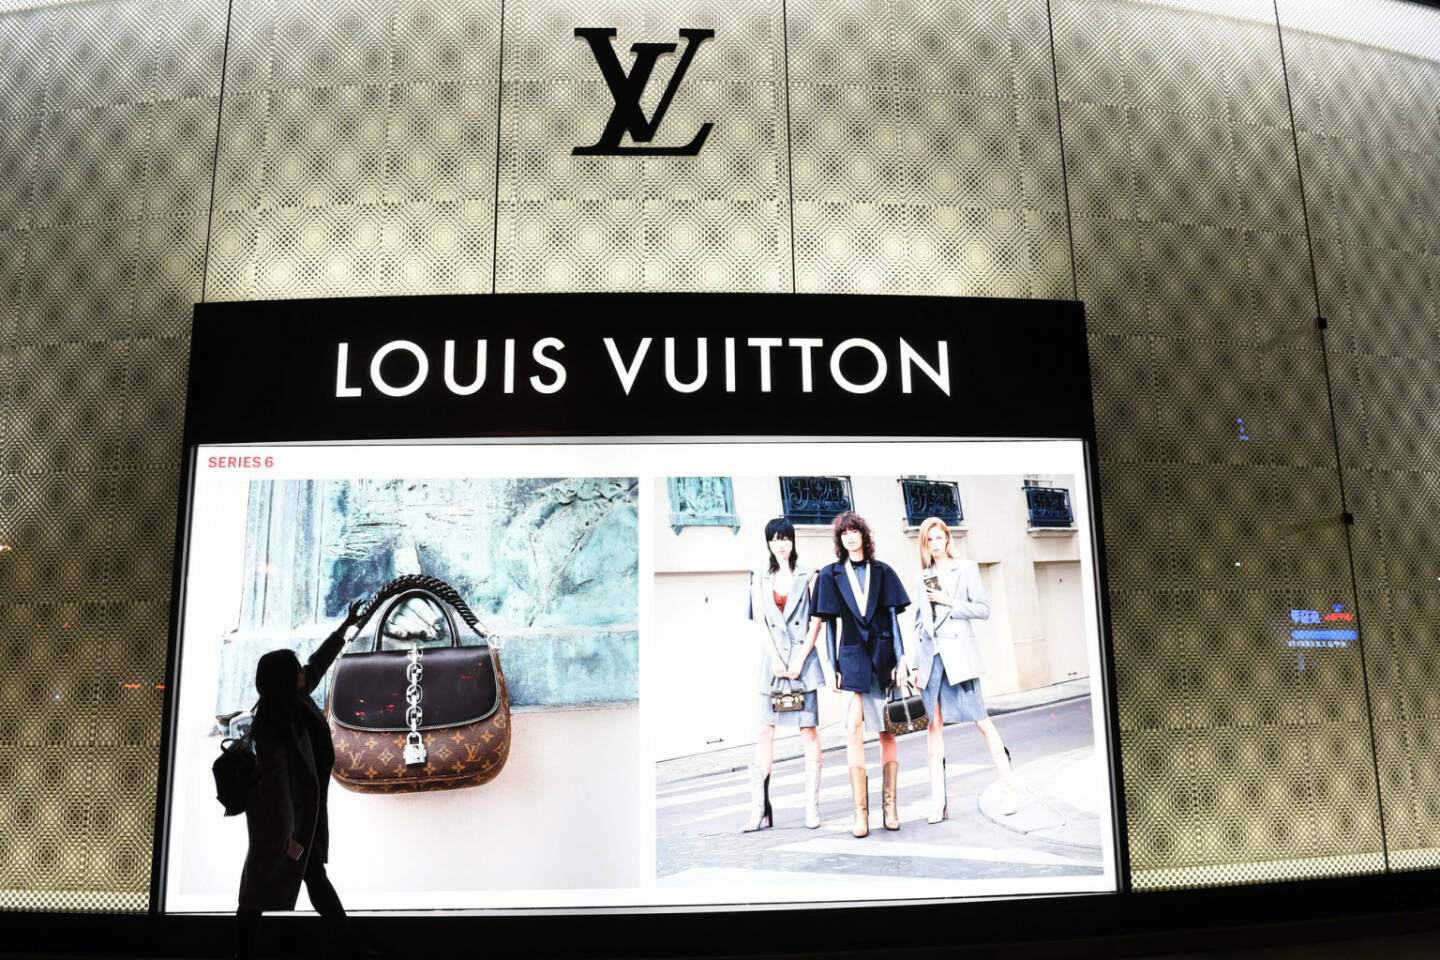 lvmh stock  Louis Vuitton Moët Hennessy (LVMH) Stock Analysis #lvmh lvmuy  stock lvmh stock 